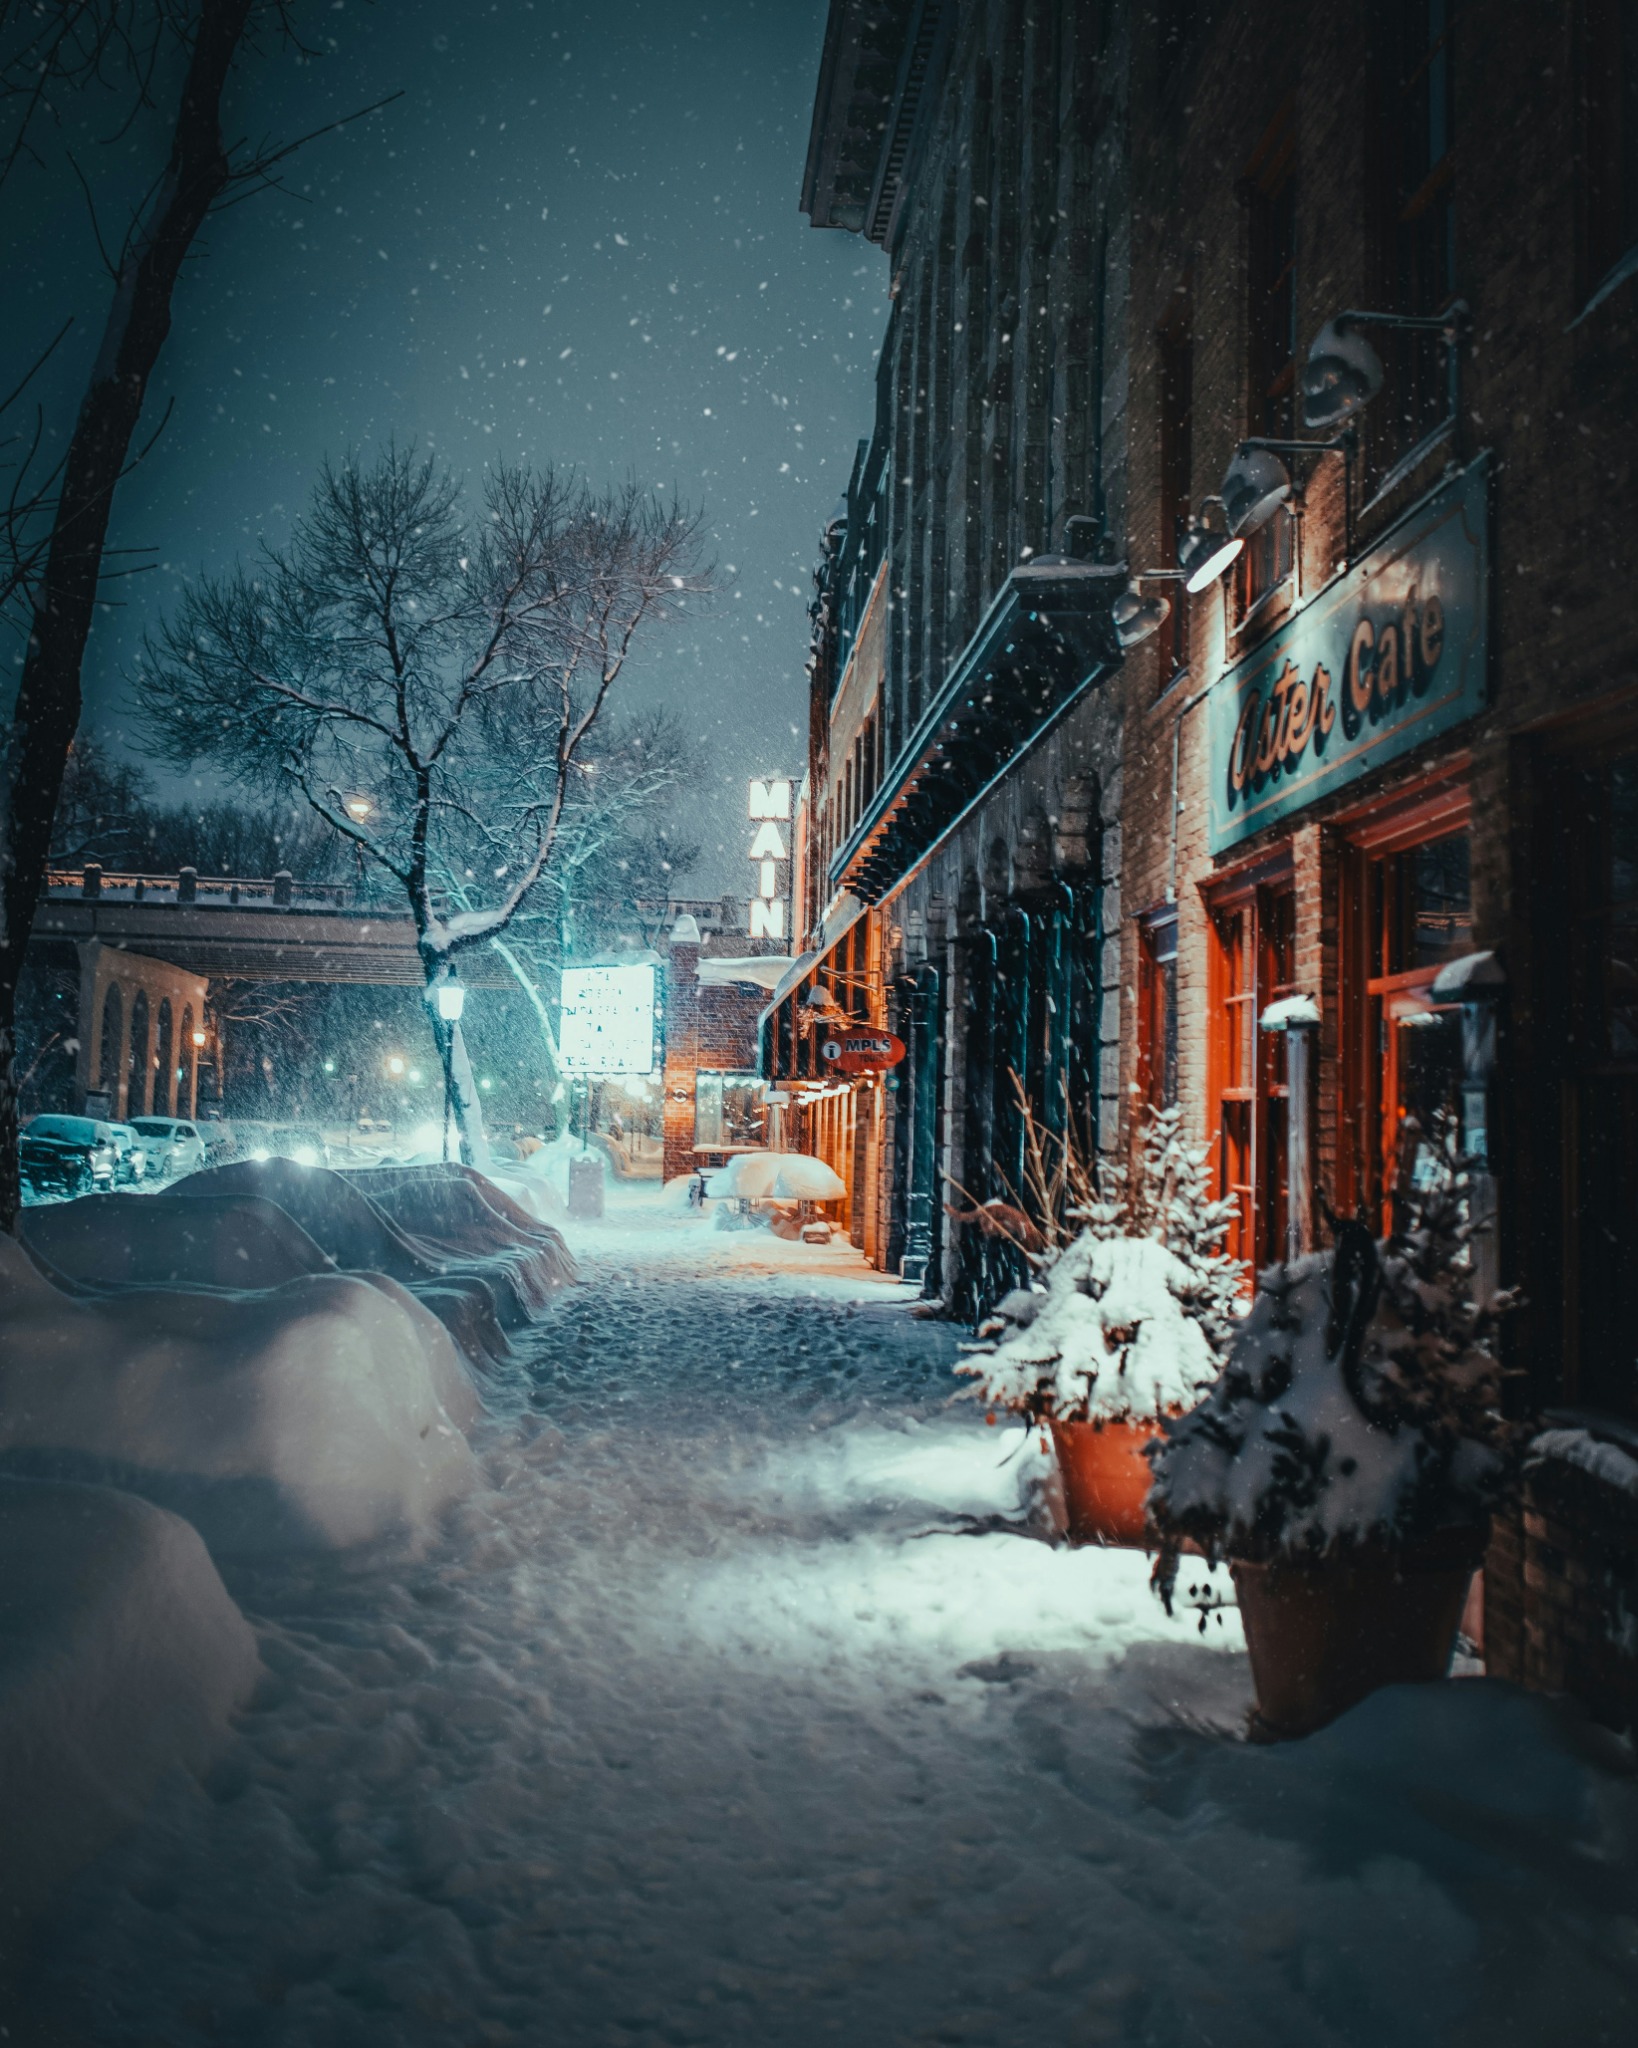 Snowy street night lights